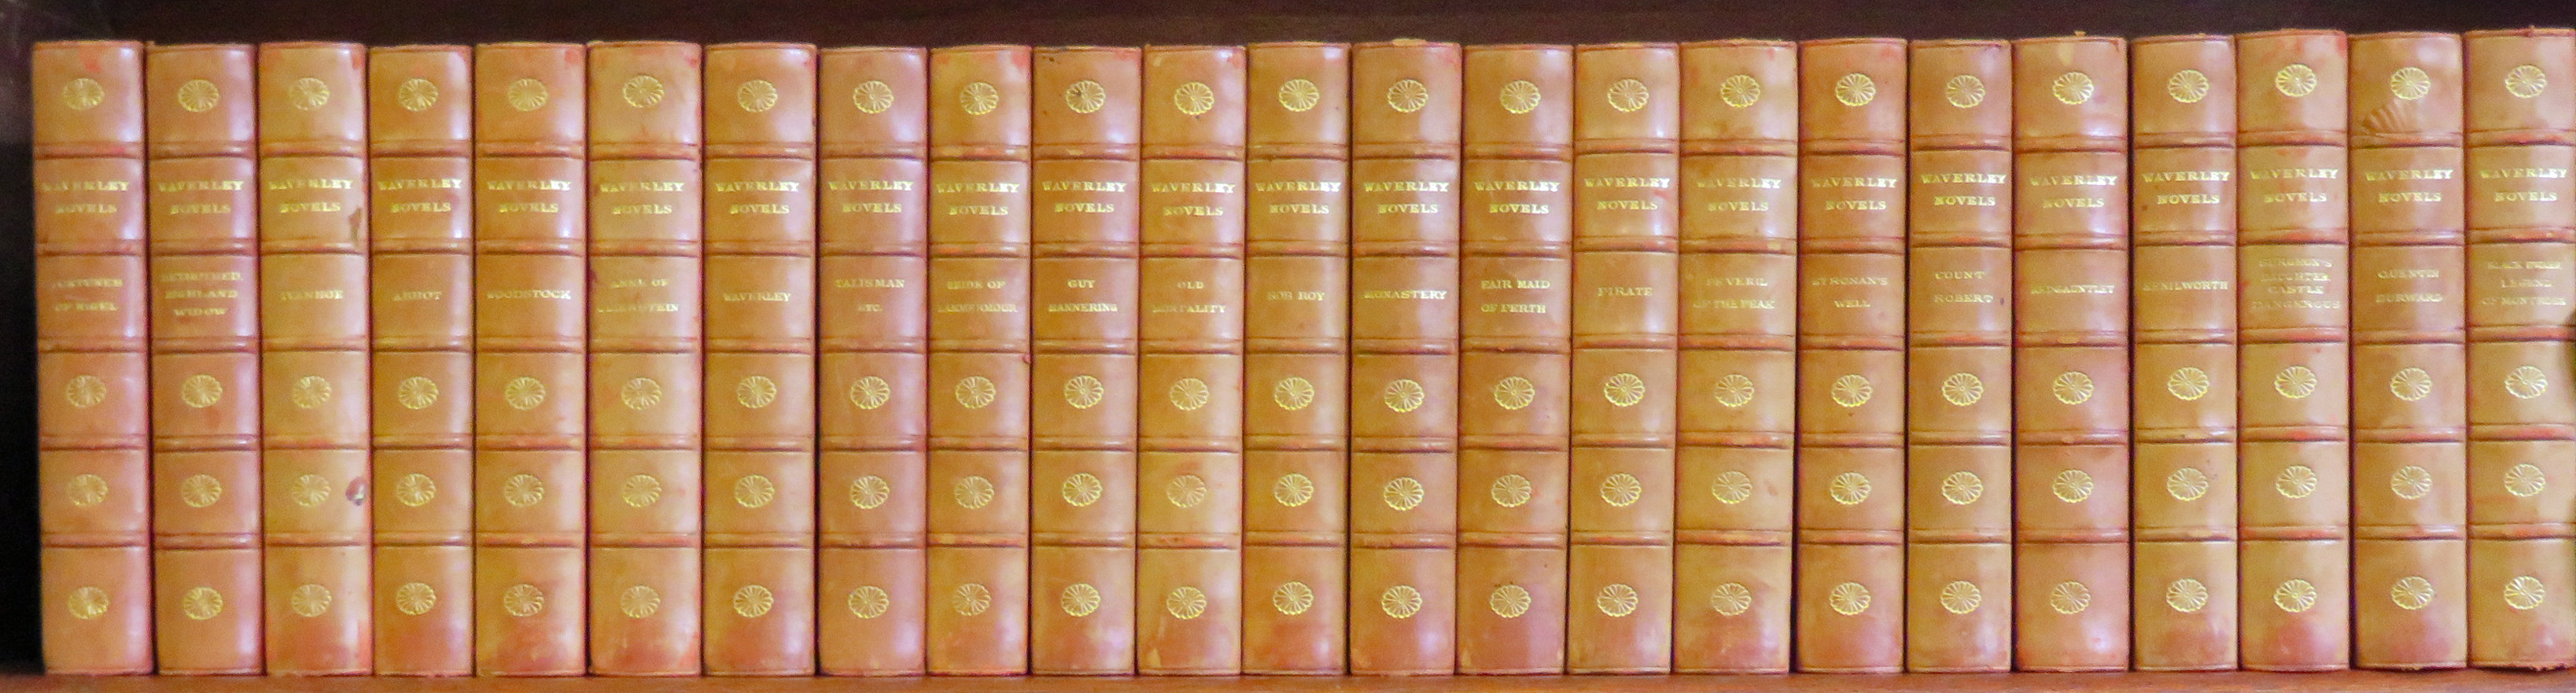 Beautifully Bound Set of Waverley Novels in 25 Volumes